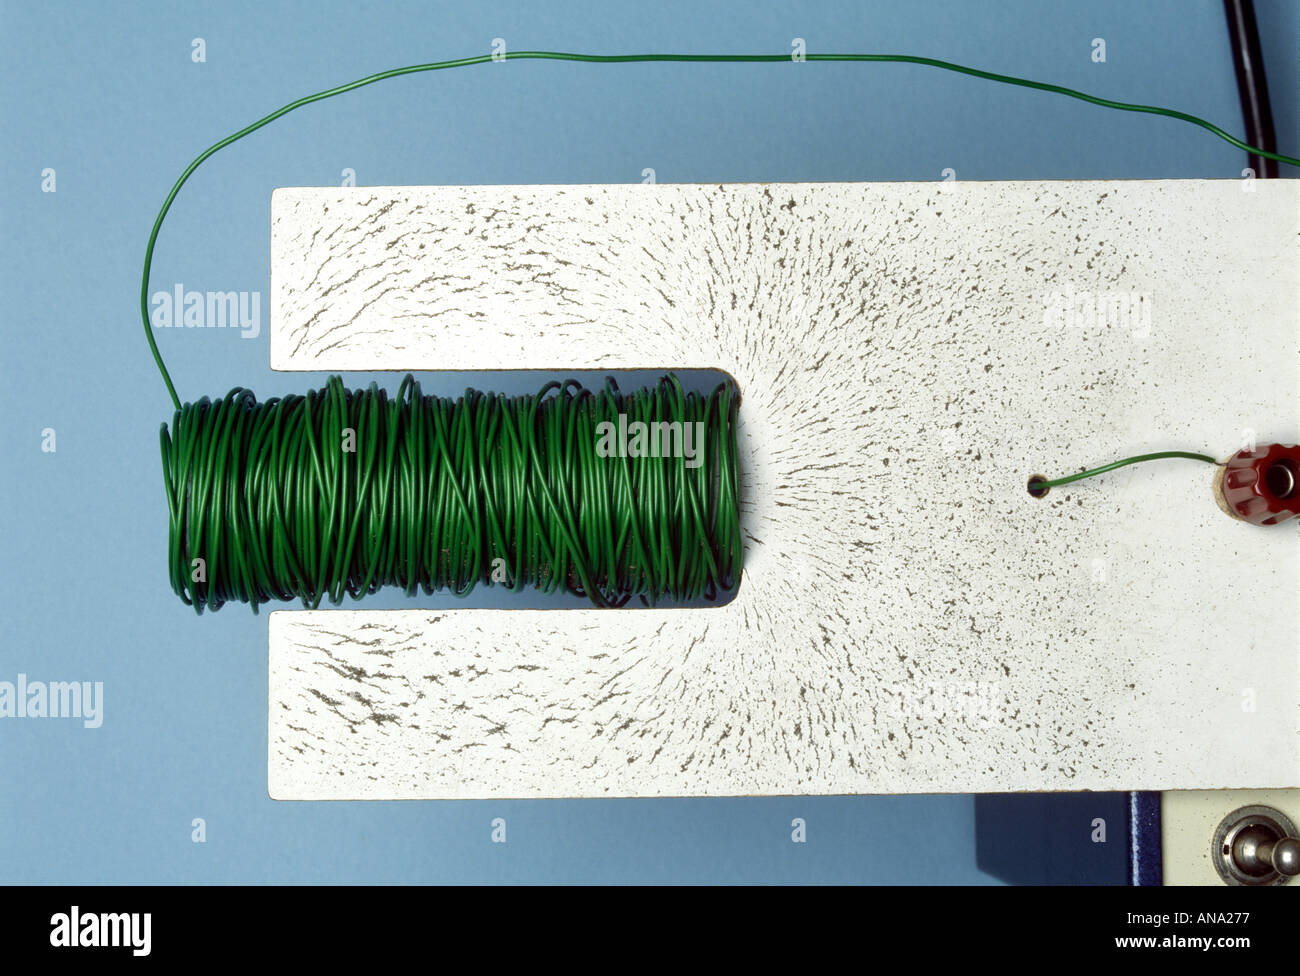 Magnetfeld spule -Fotos und -Bildmaterial in hoher Auflösung – Alamy